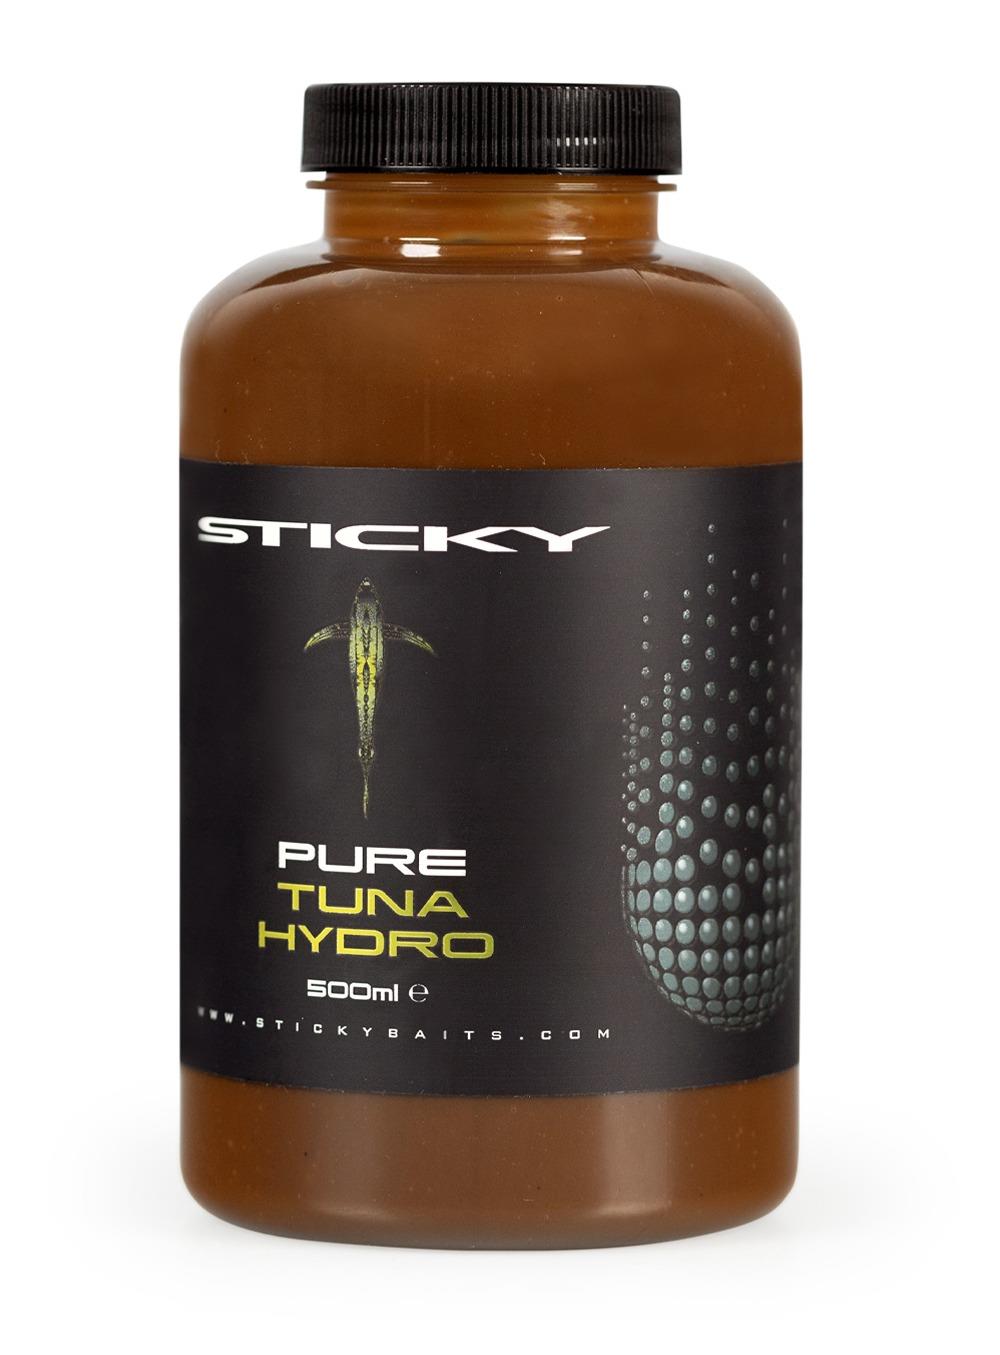 Sticky Baits Pure Thon Hydro